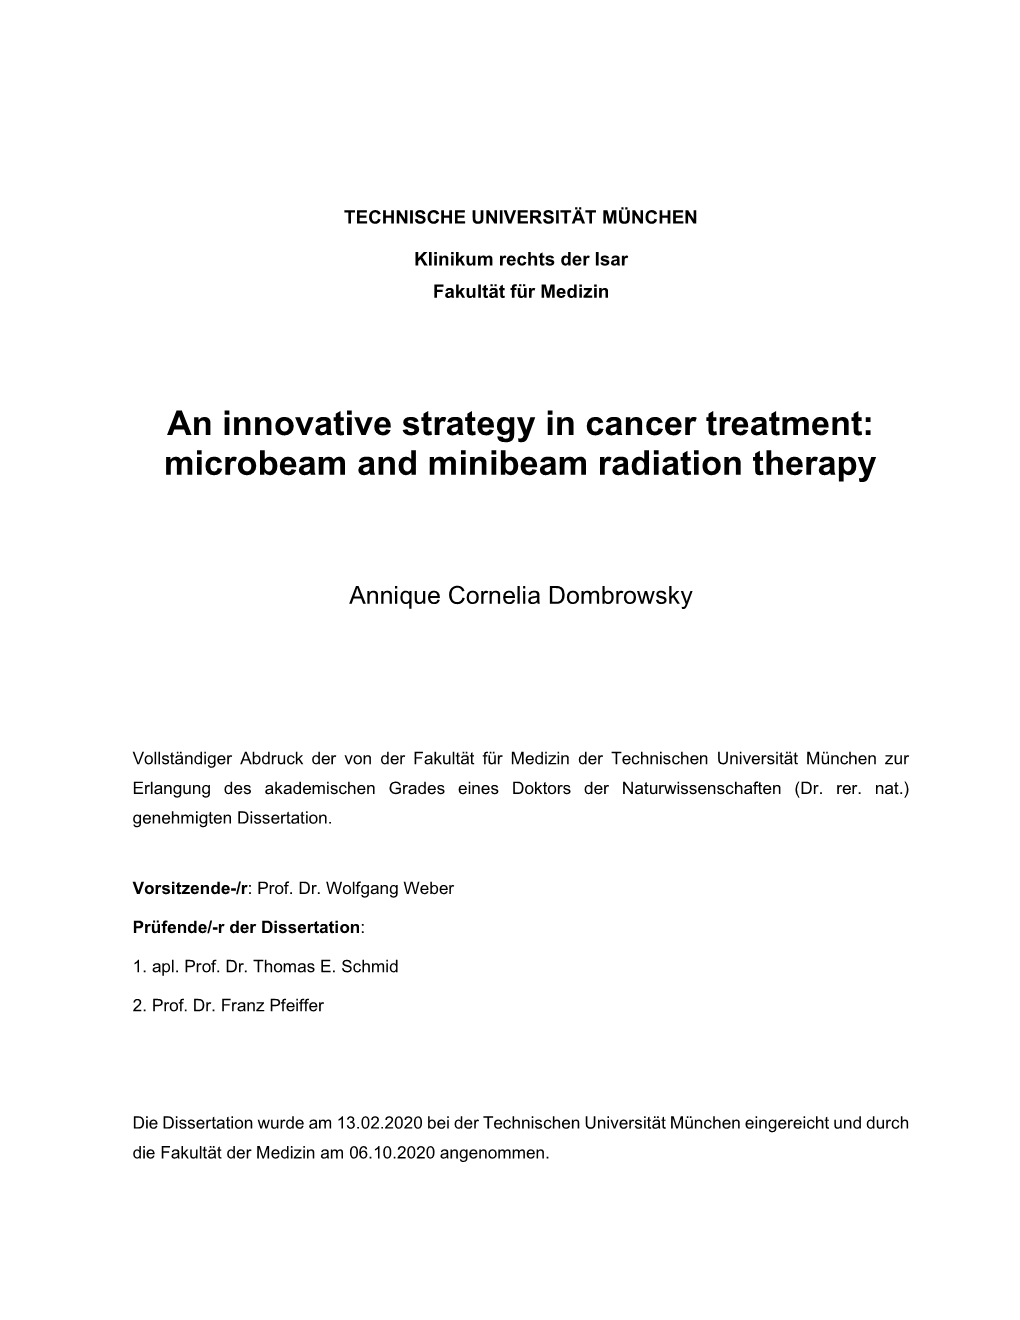 Microbeam and Minibeam Radiation Therapy